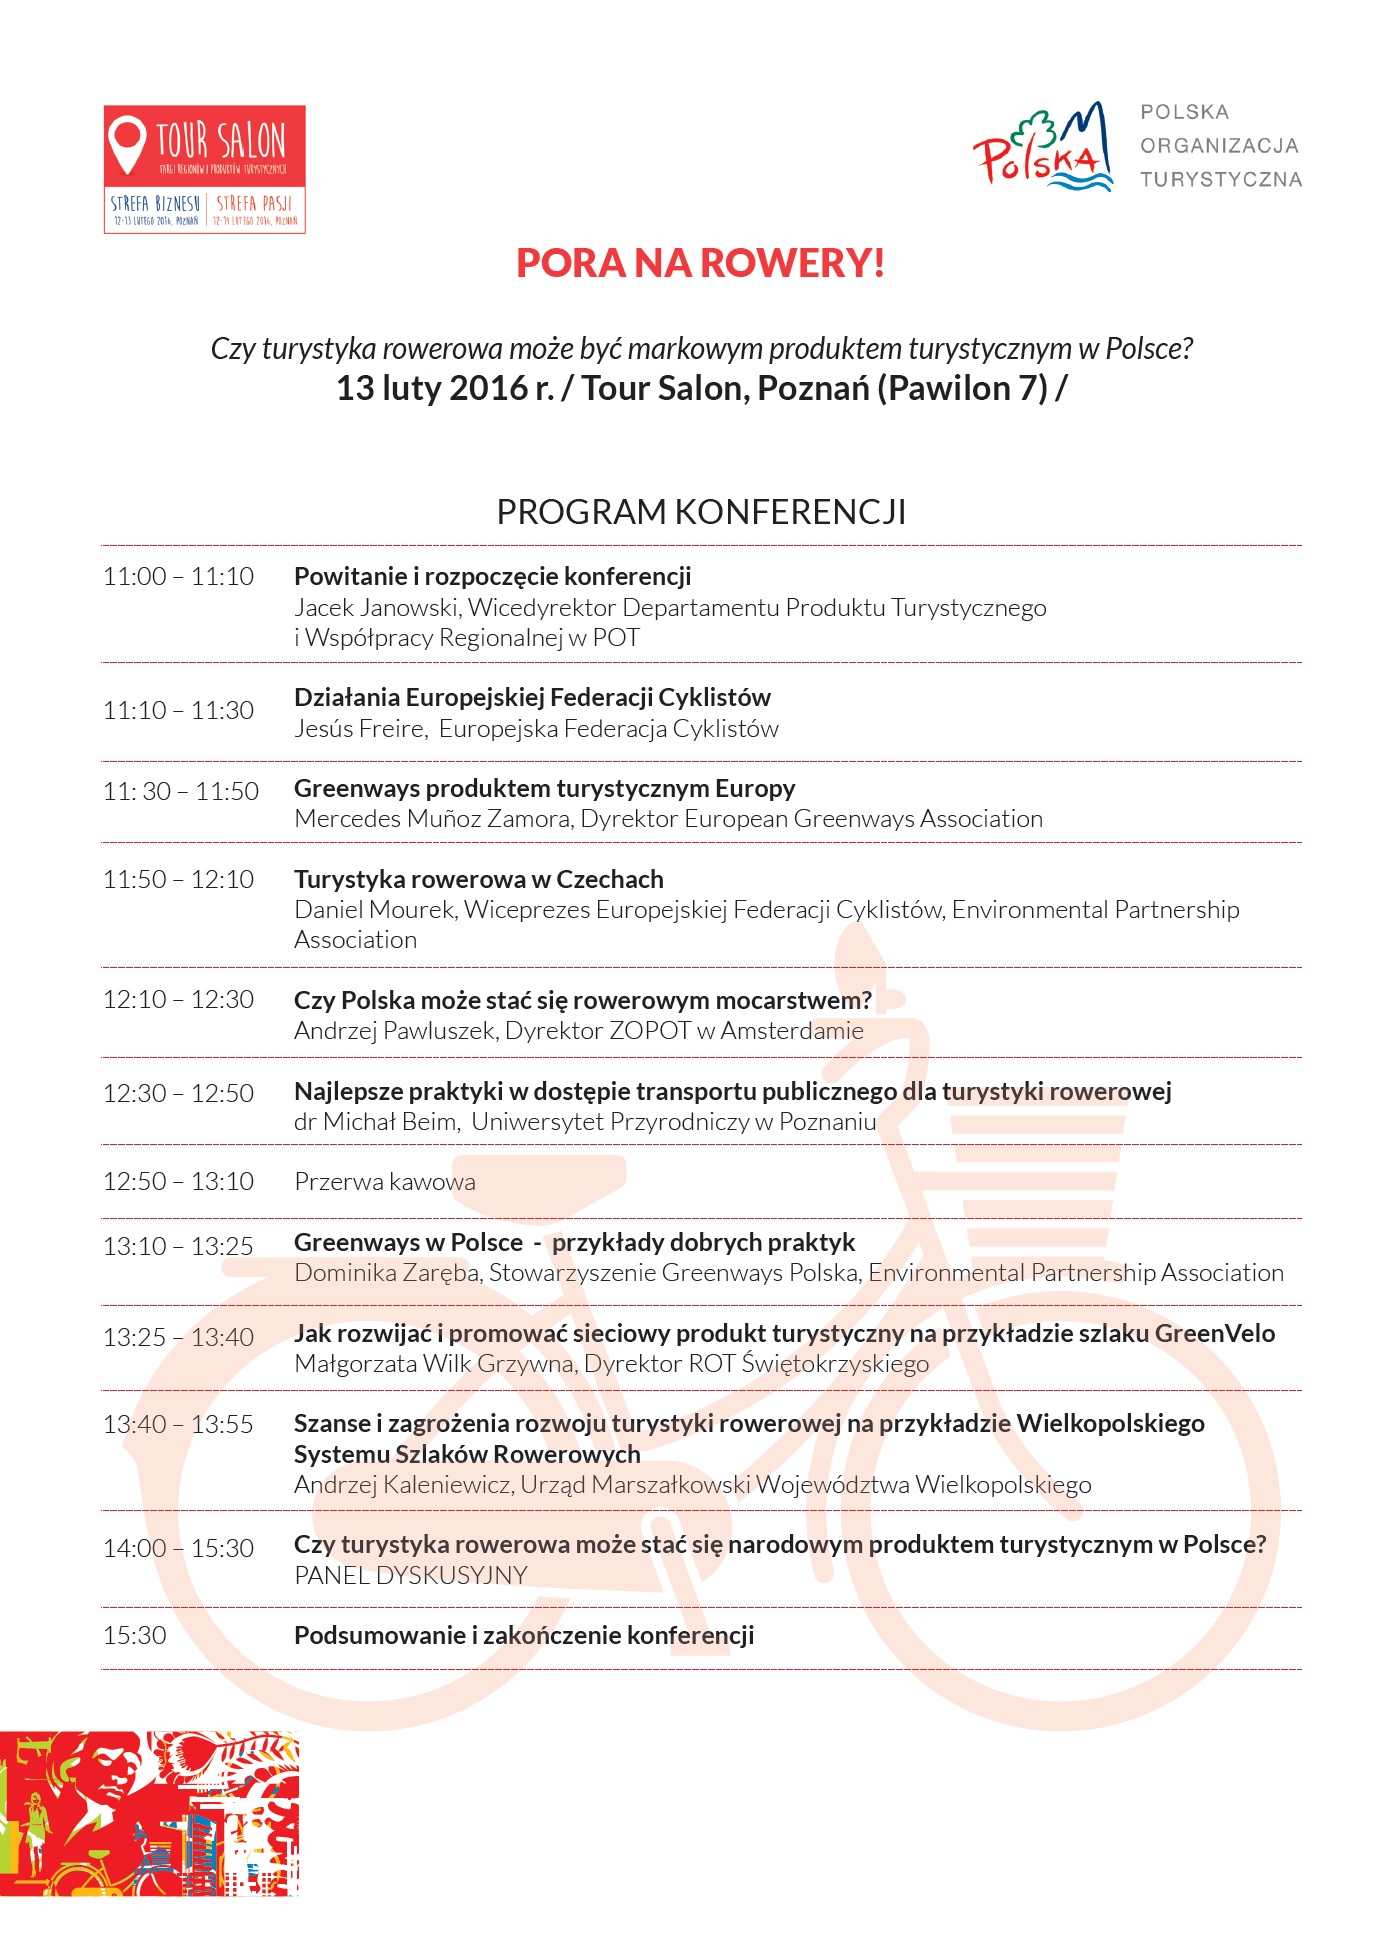 POT_program_konferencji